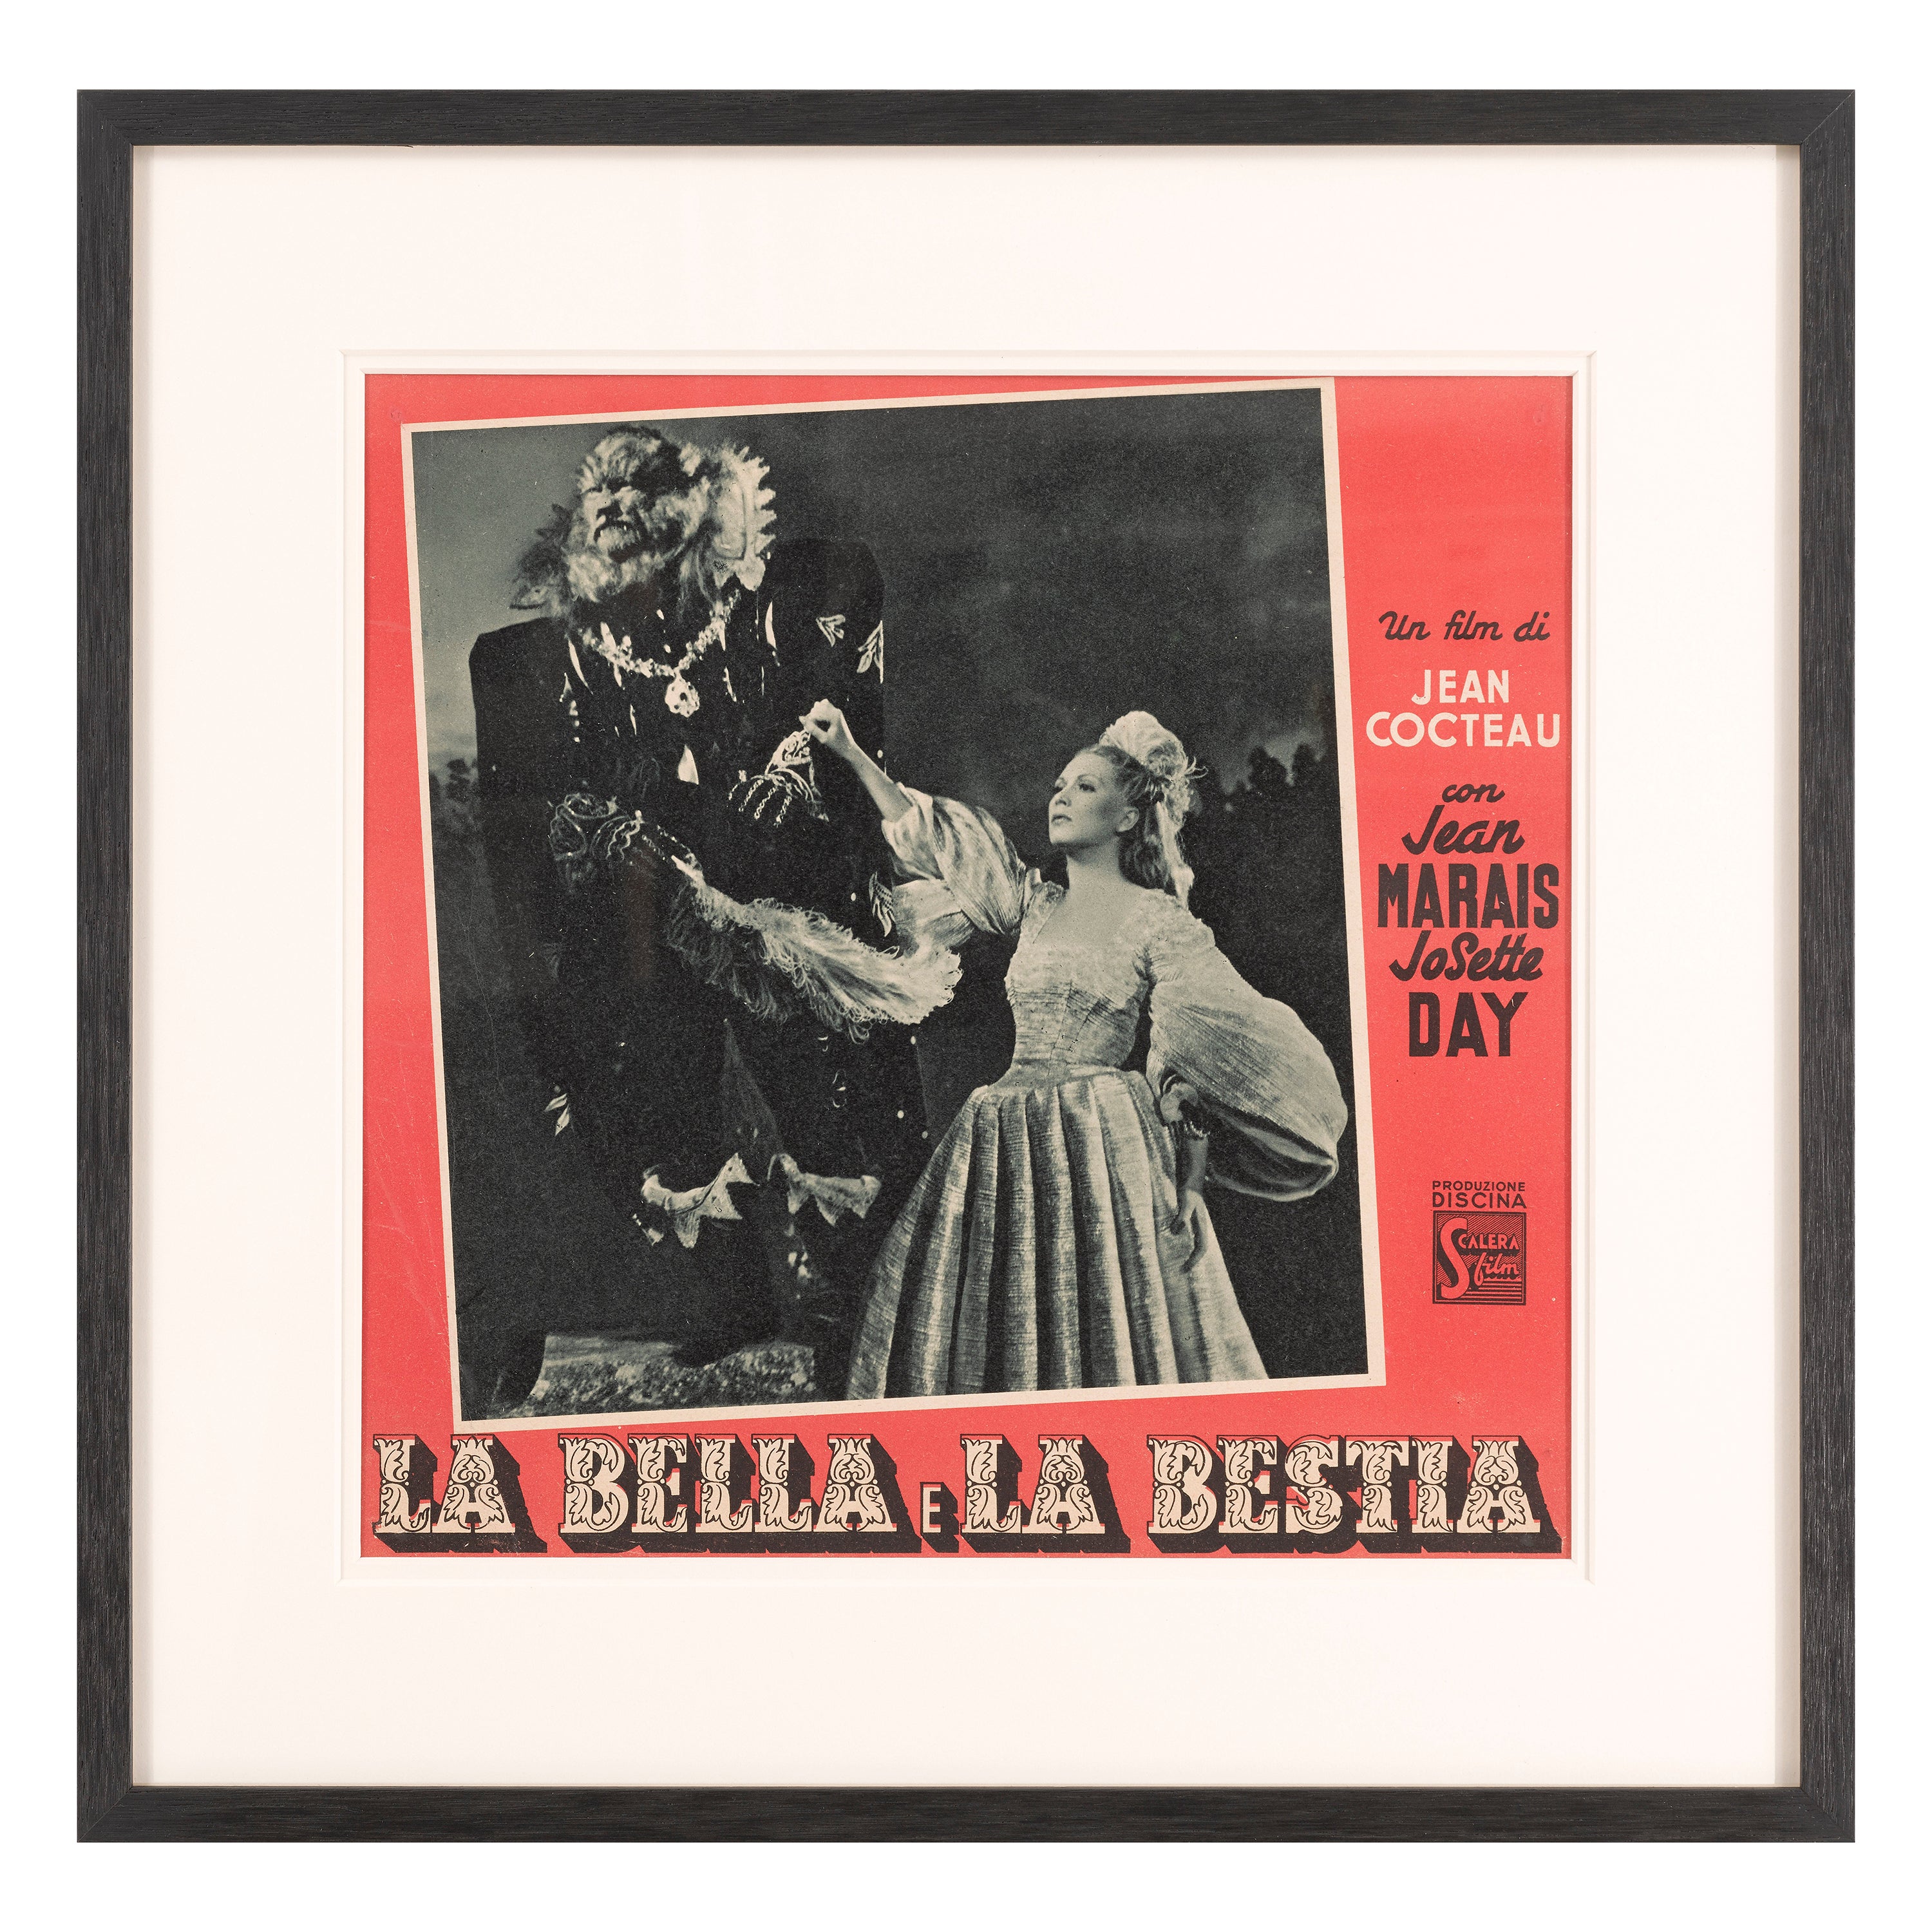 La Belle Et La Bete or Beauty and the Beast